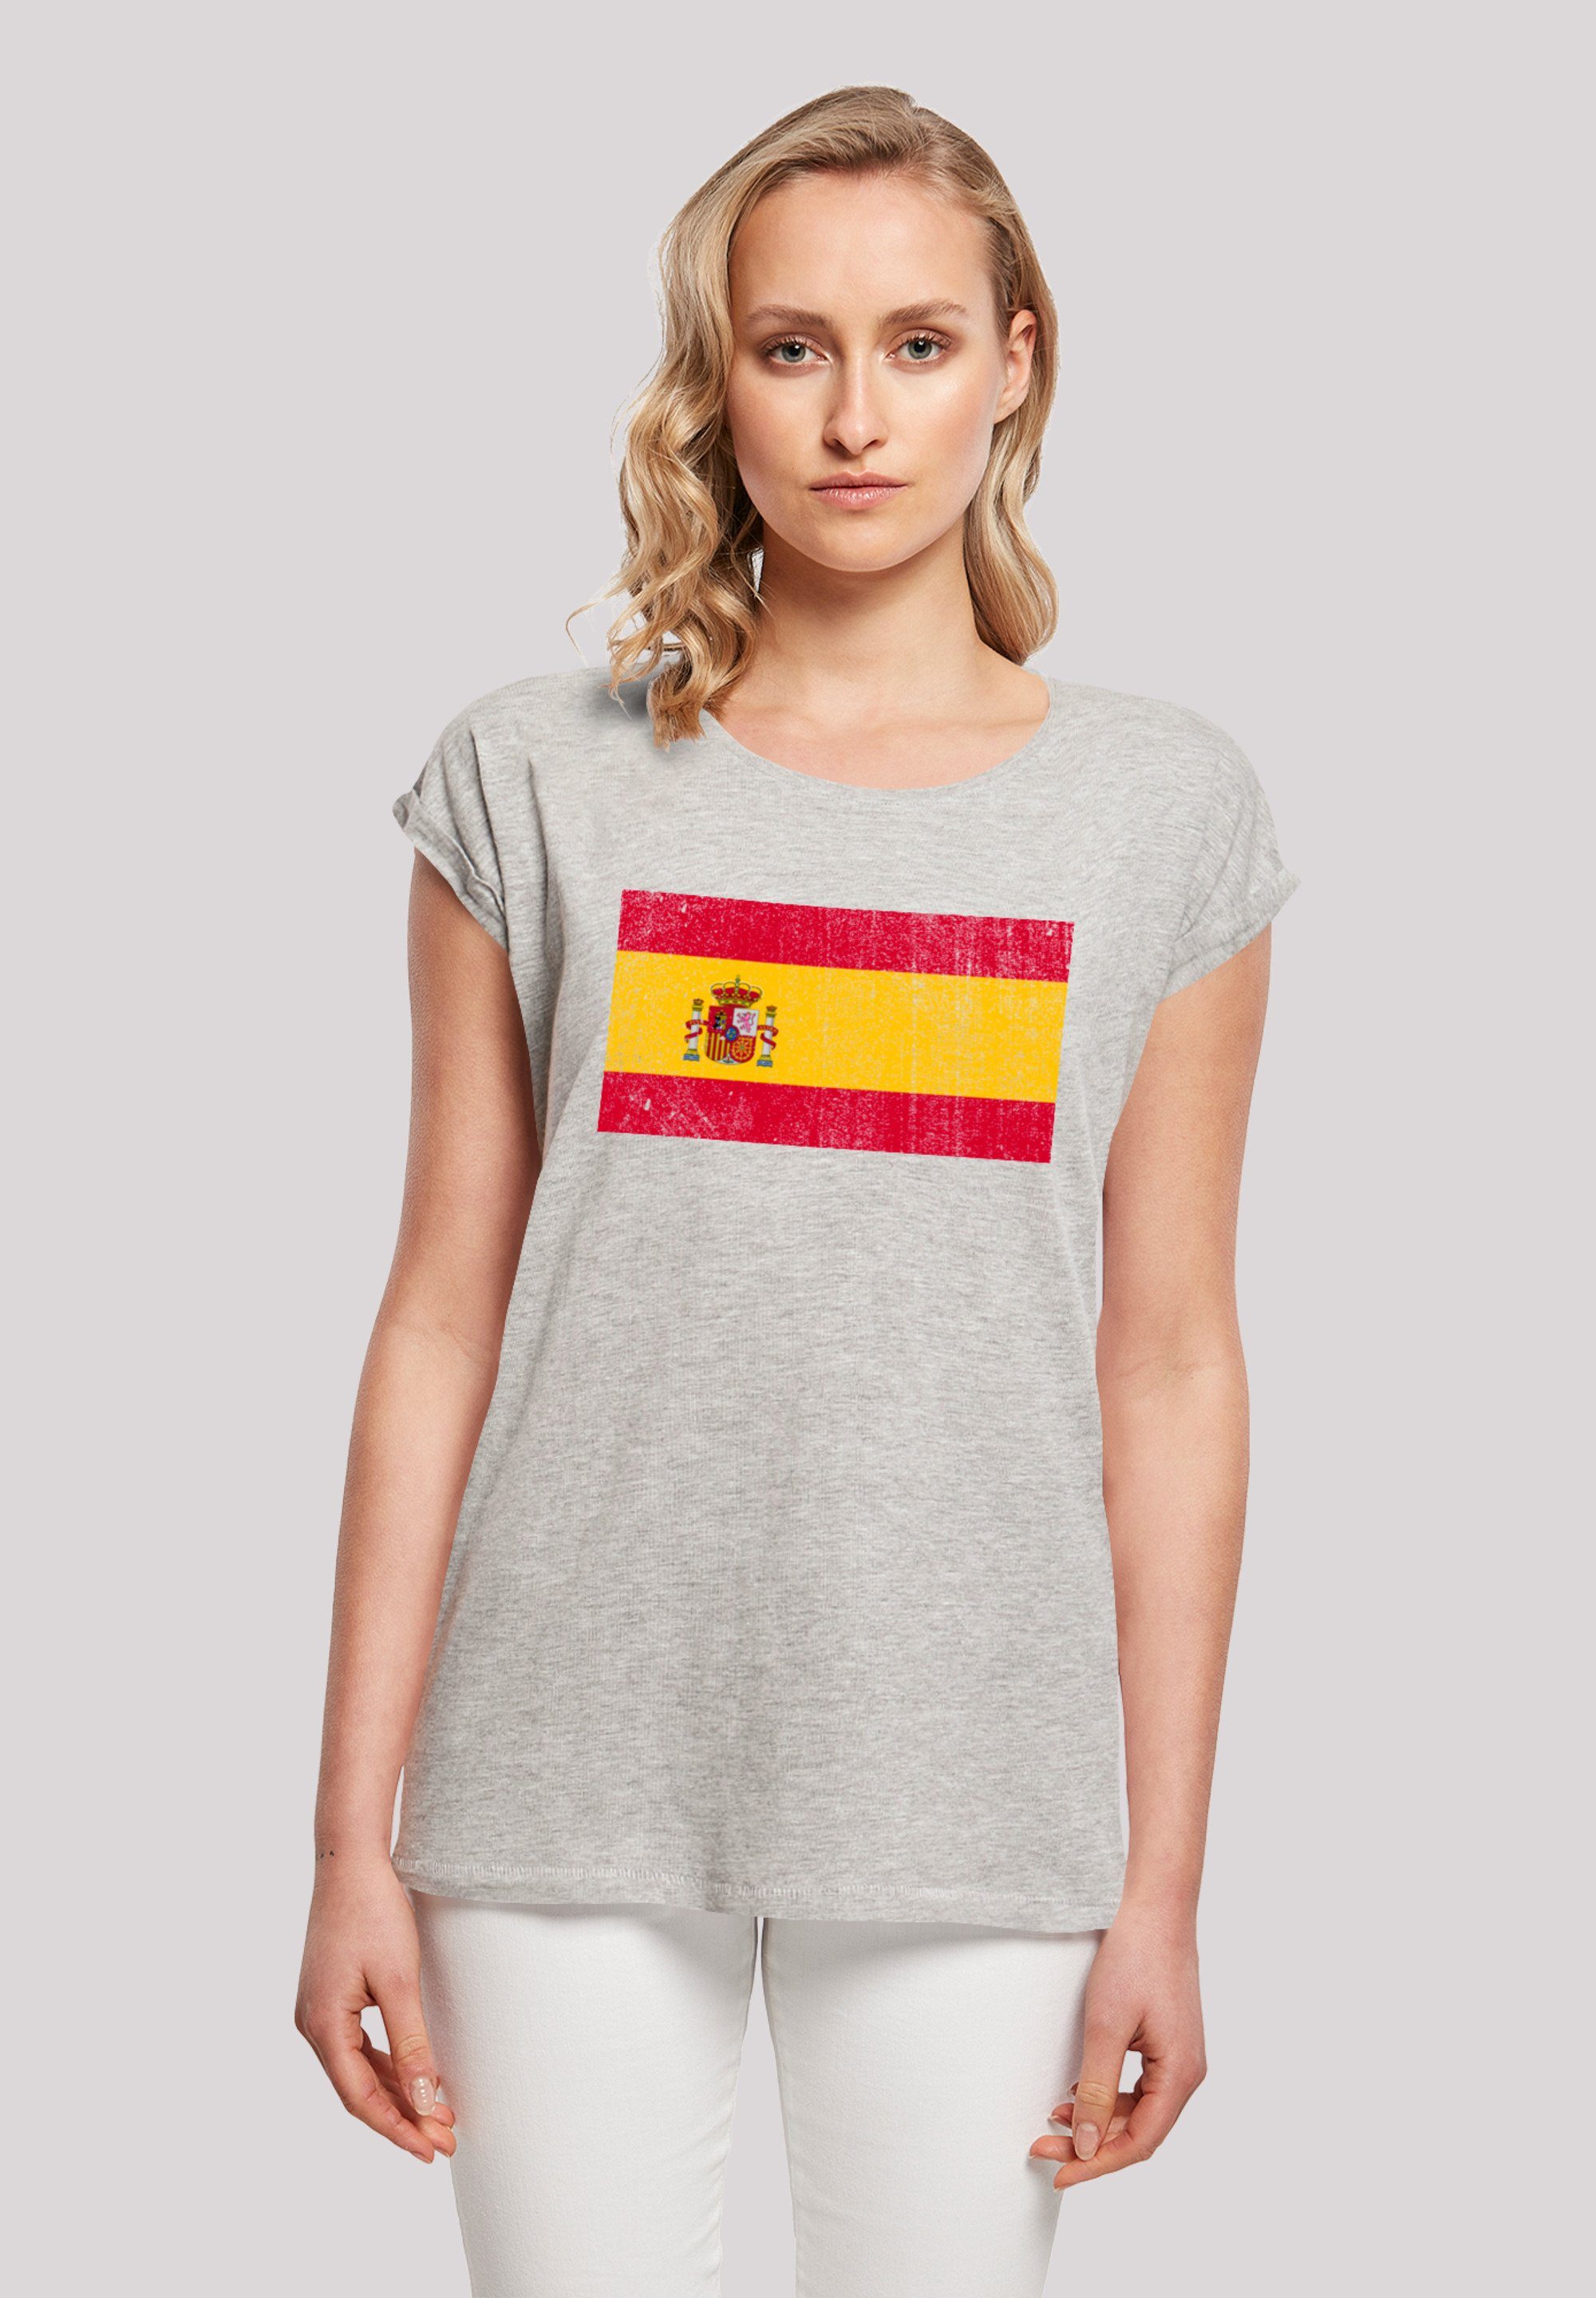 F4NT4STIC Print, cm ist groß M Flagge T-Shirt Das Größe 170 Model und trägt distressed Spain Spanien